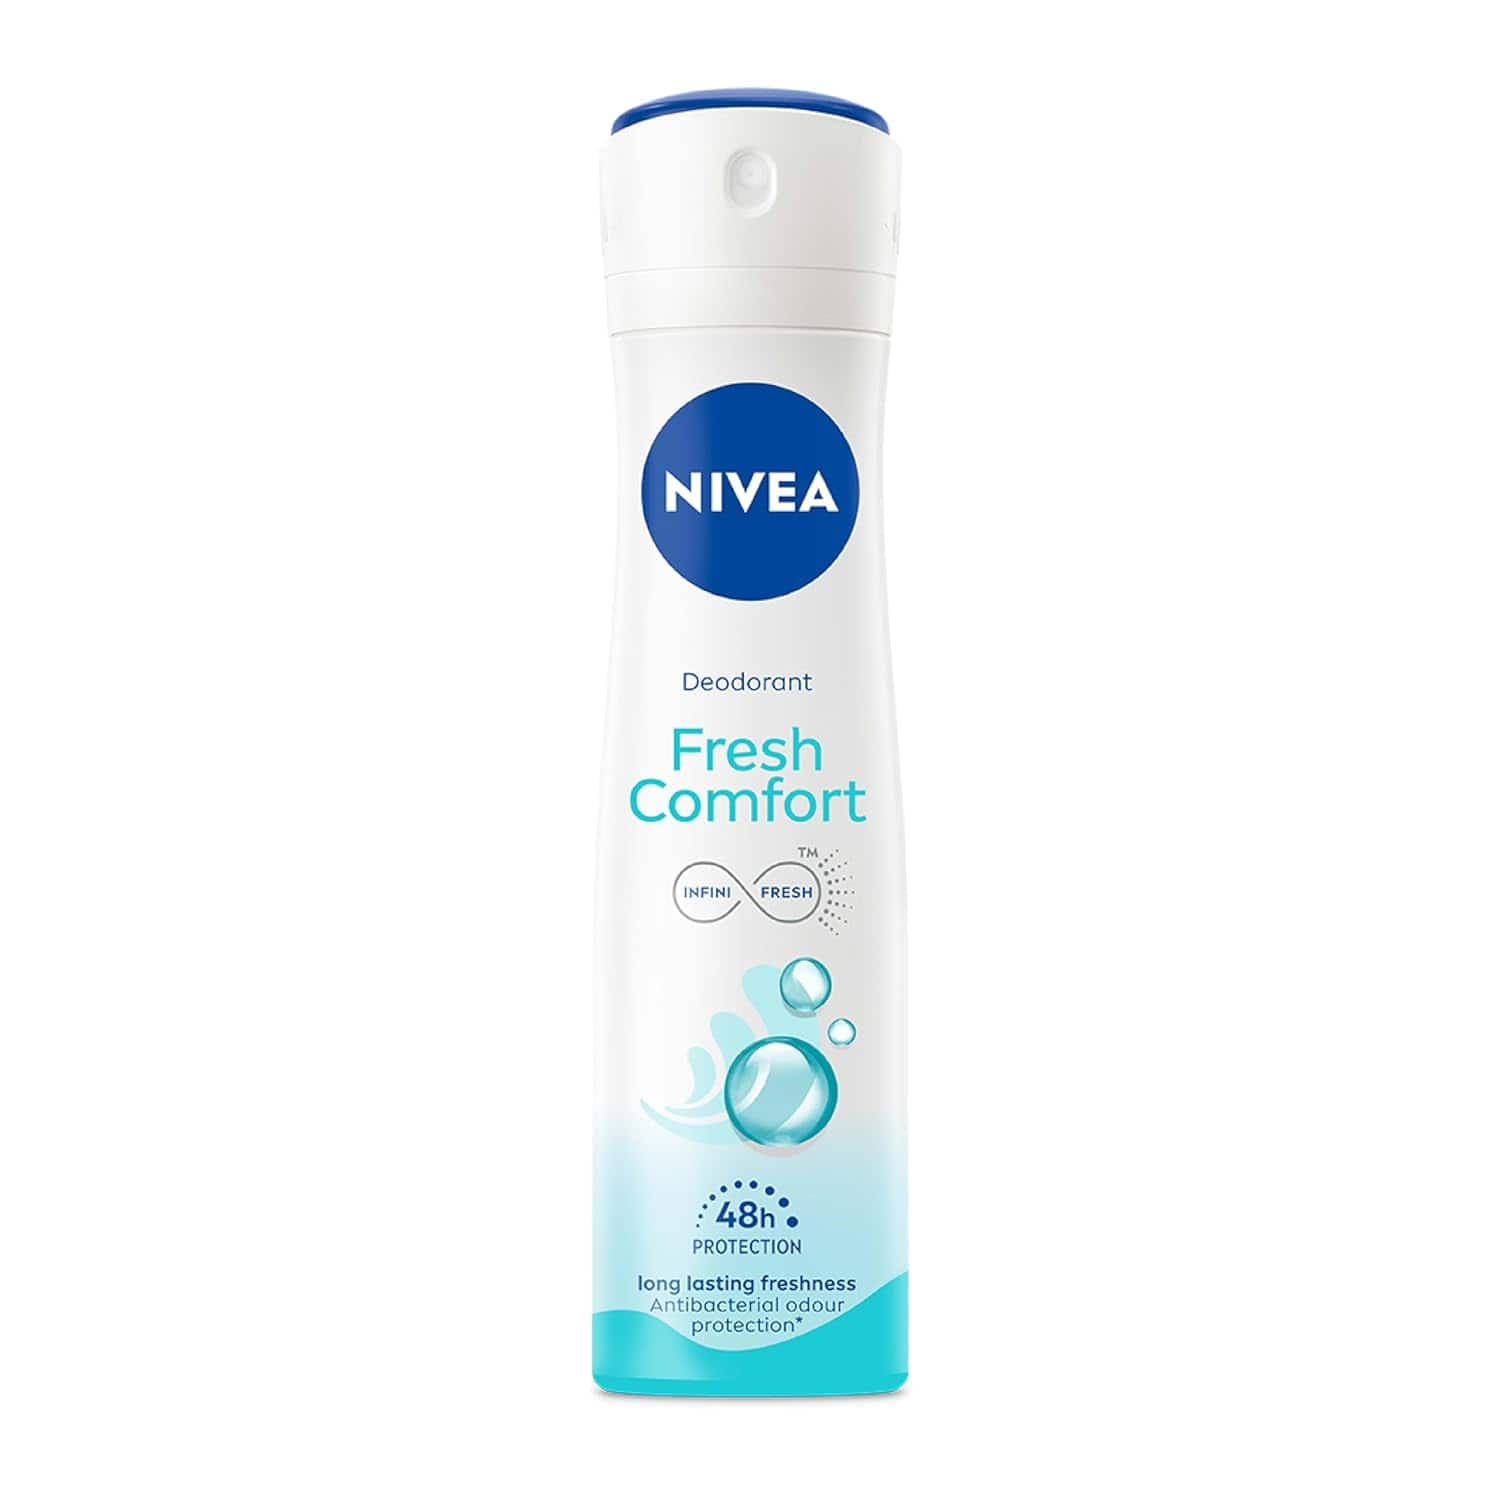 NIVEA Fresh Comfort Deodorant for Women